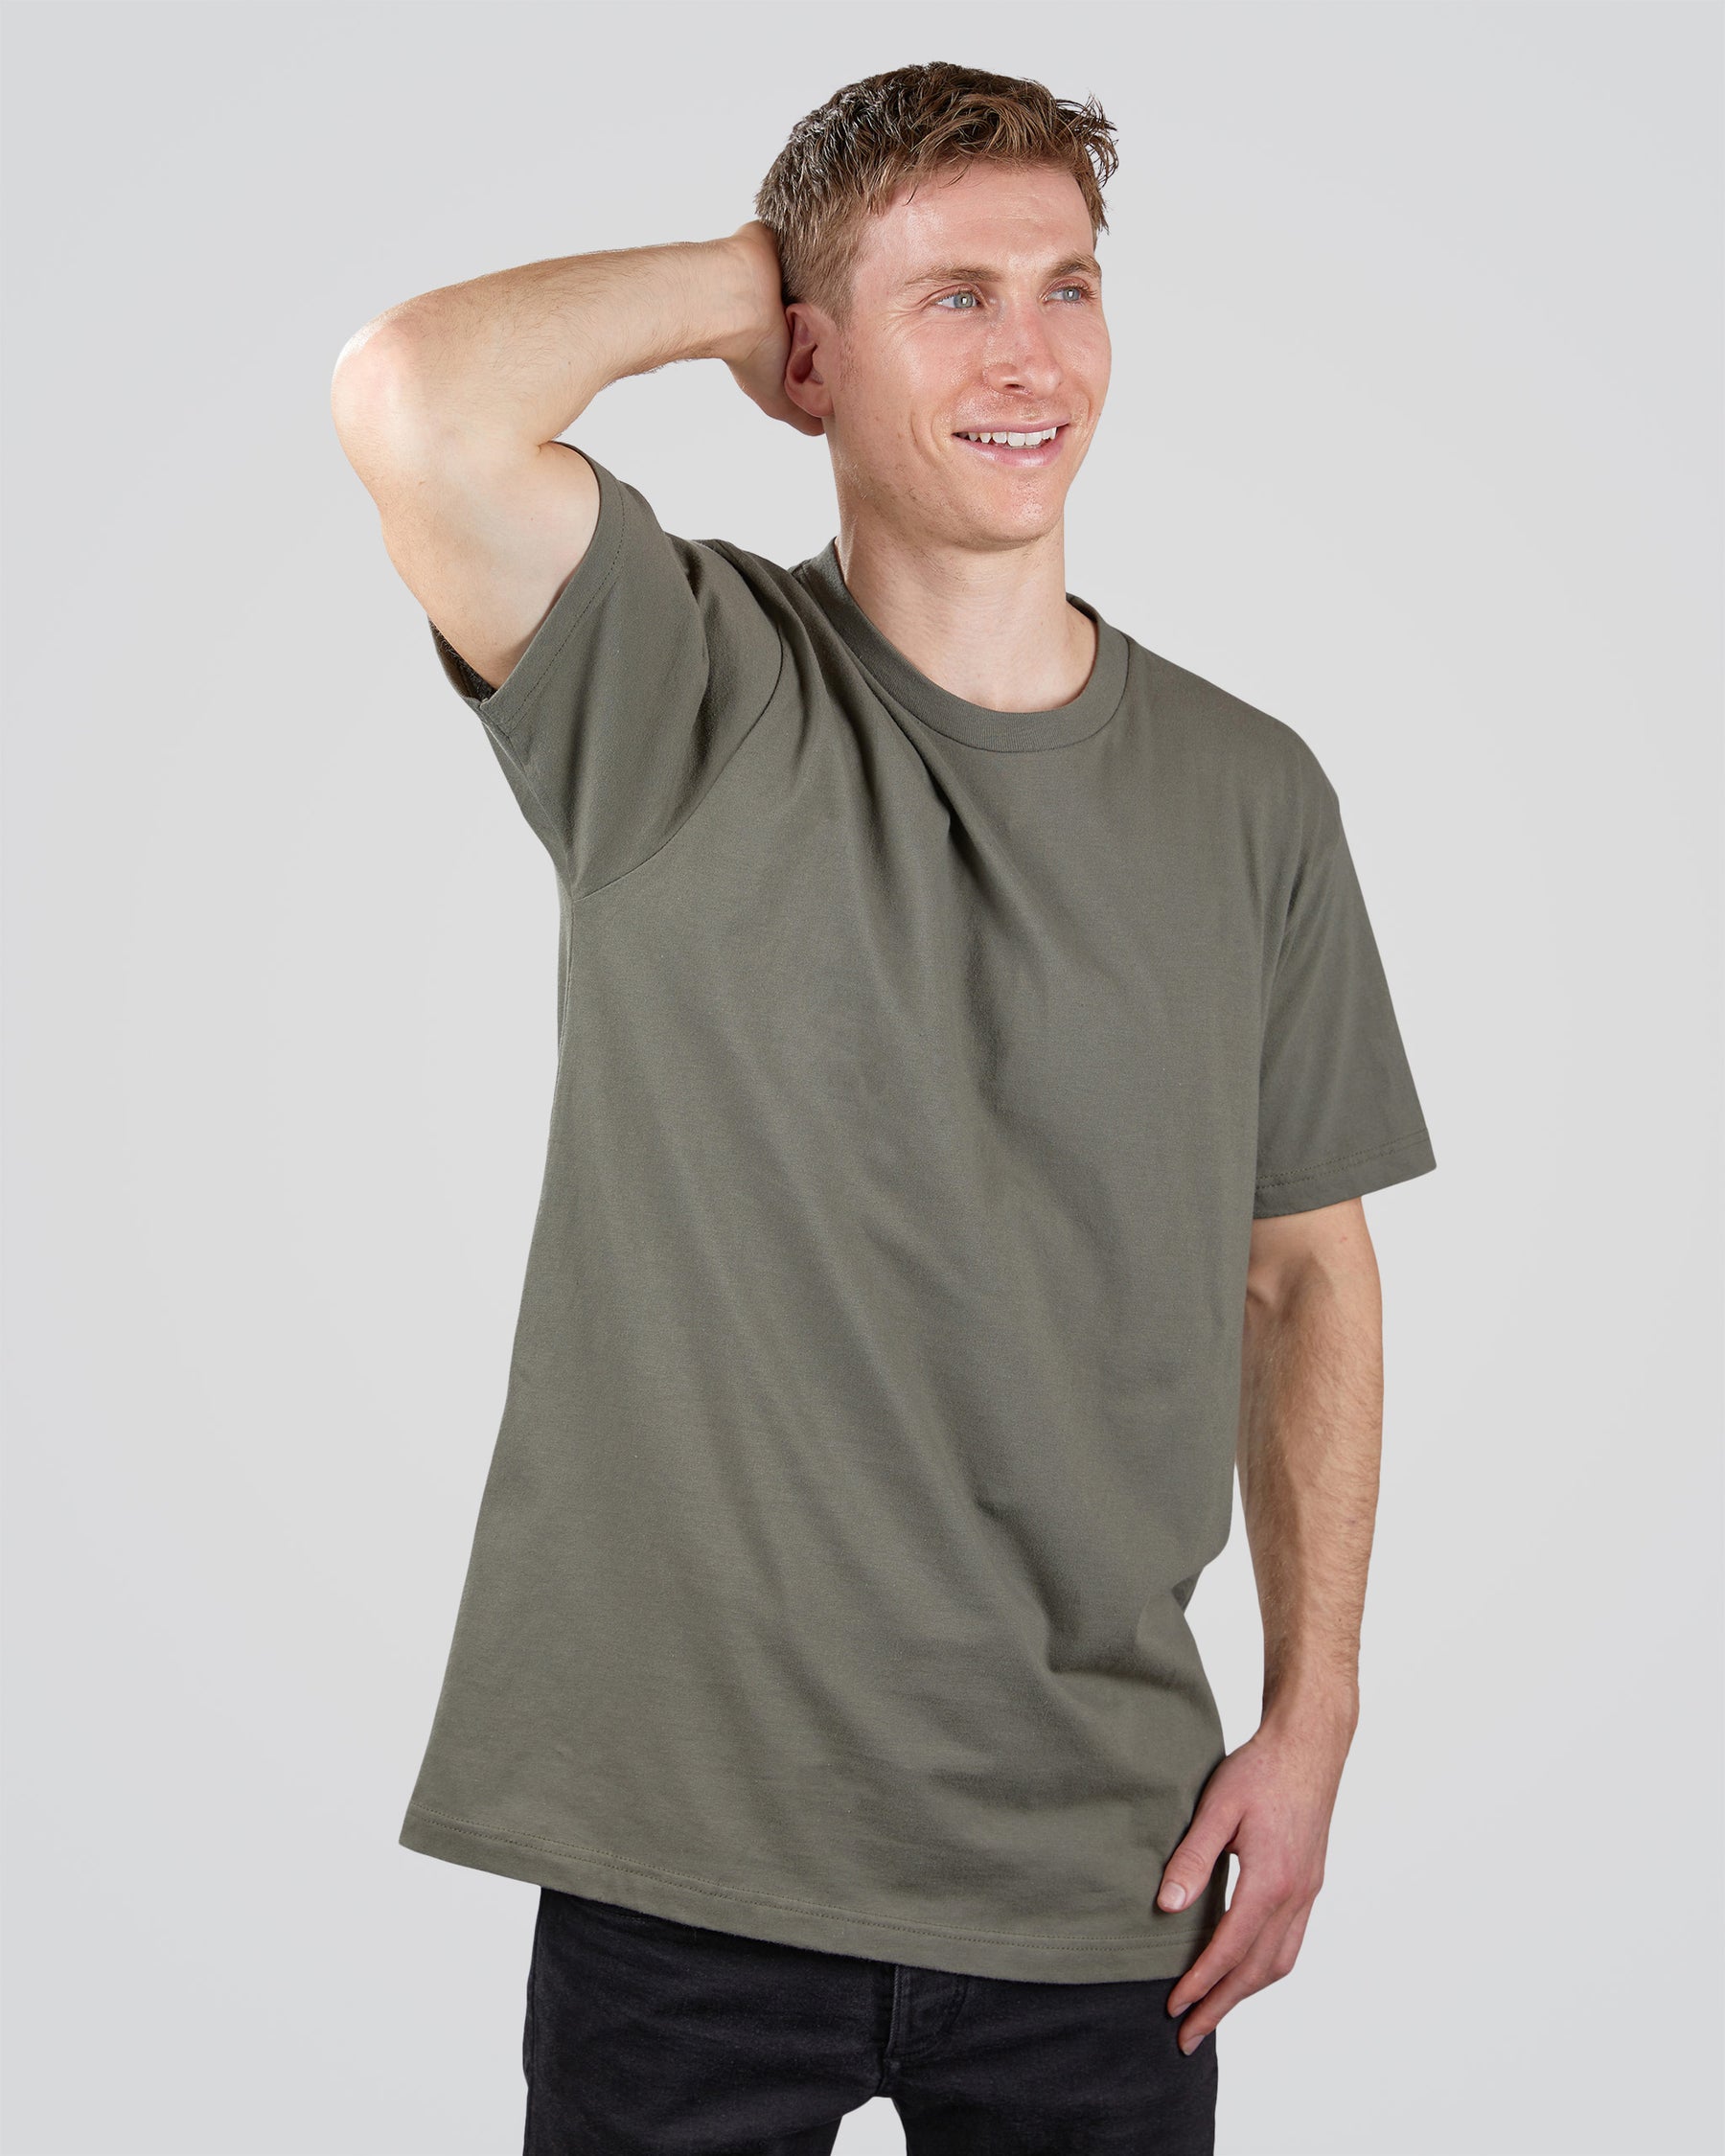 Sweat Proof Crewneck T-Shirt for Men